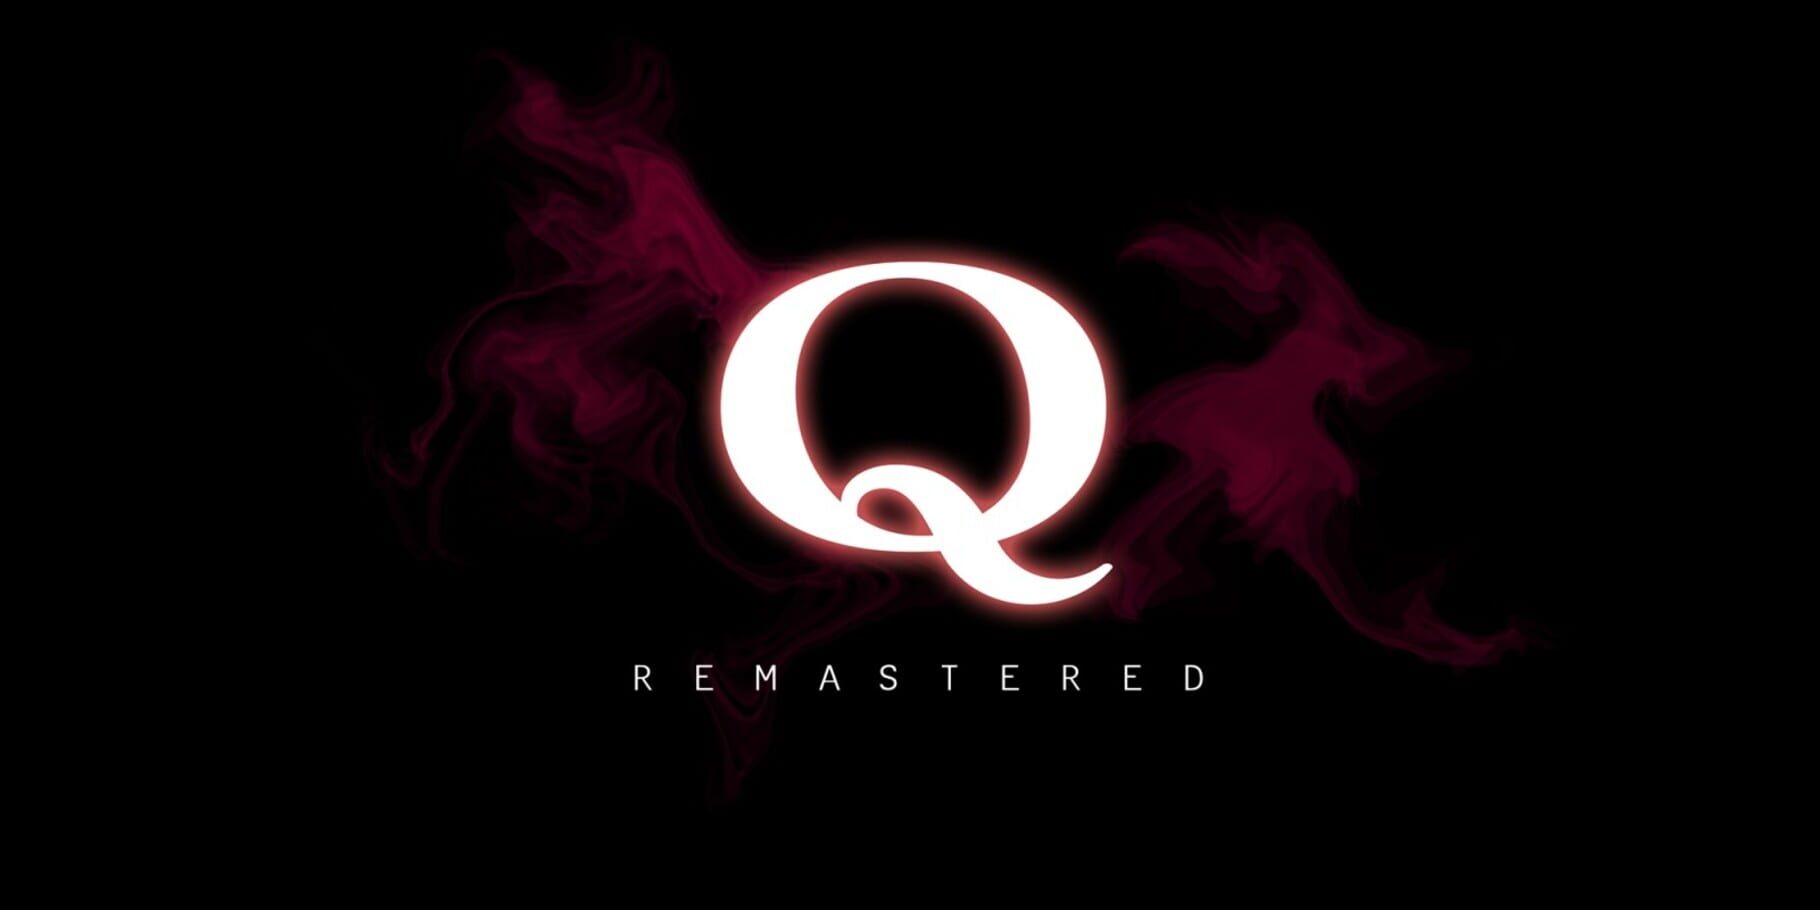 Q Remastered artwork